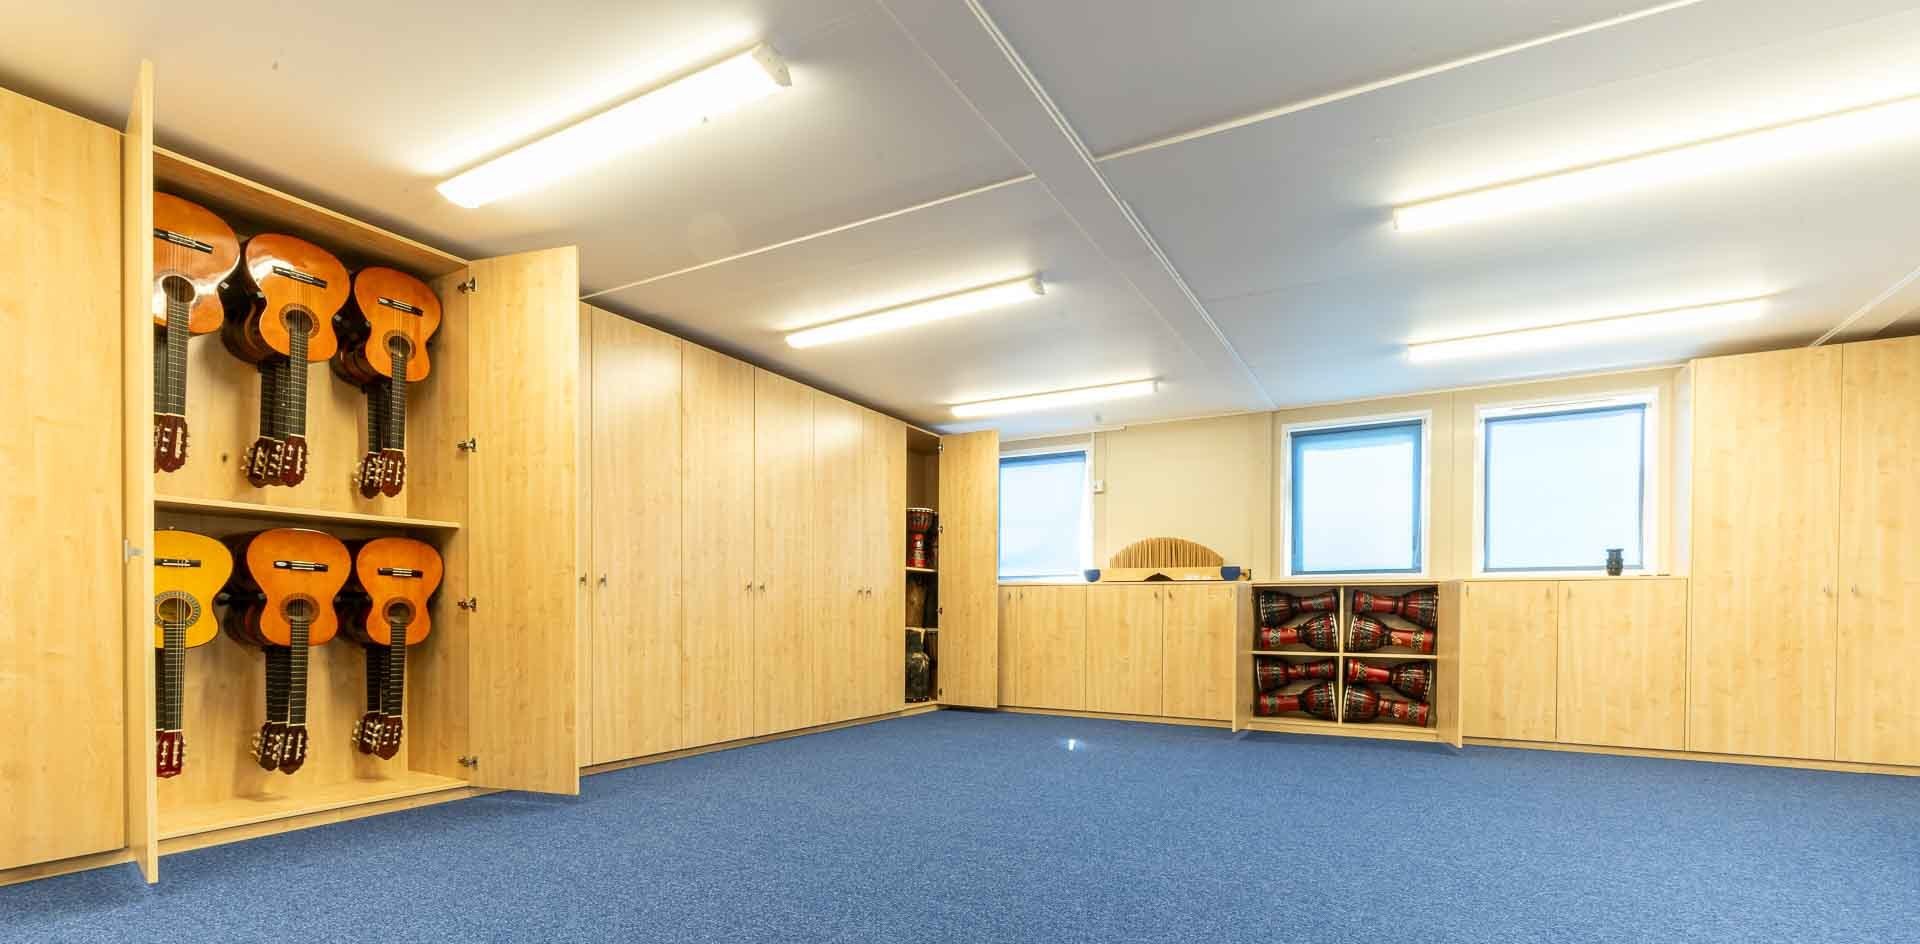 School Environment Enhancement - Music Room by Adam Hope Bespoke